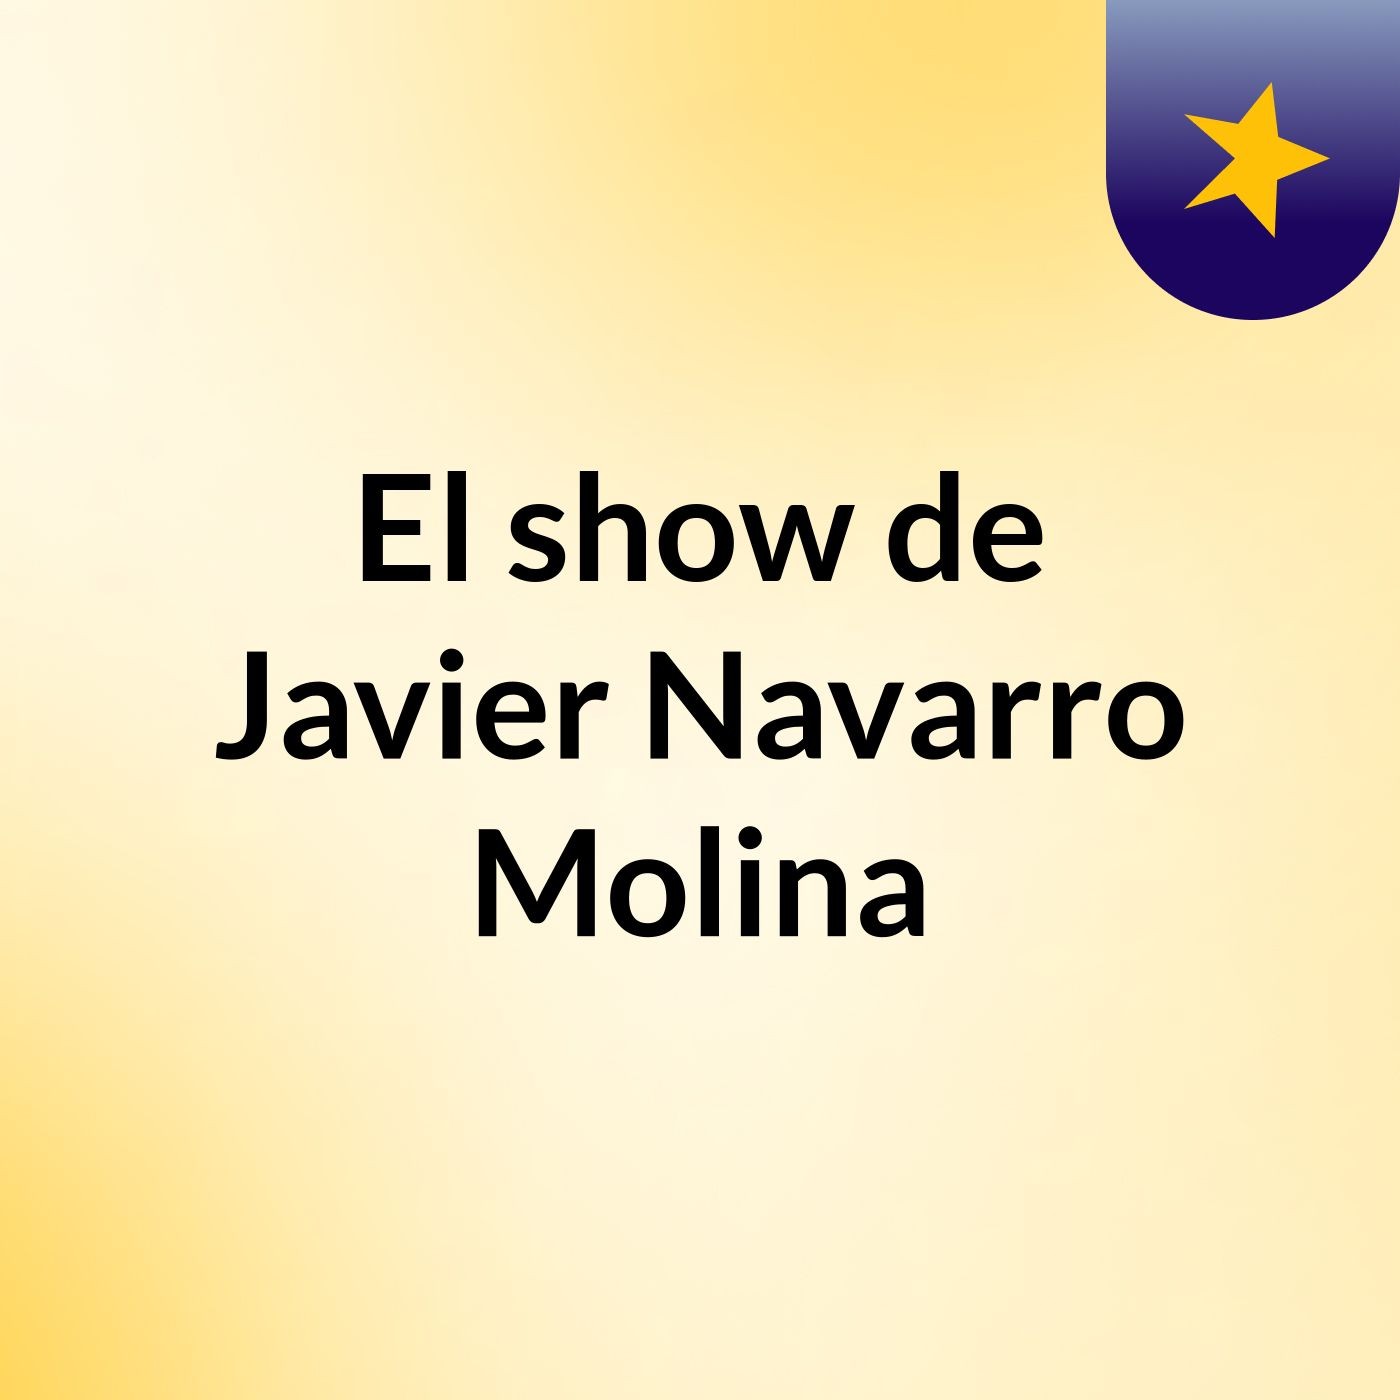 El show de Javier Navarro Molina